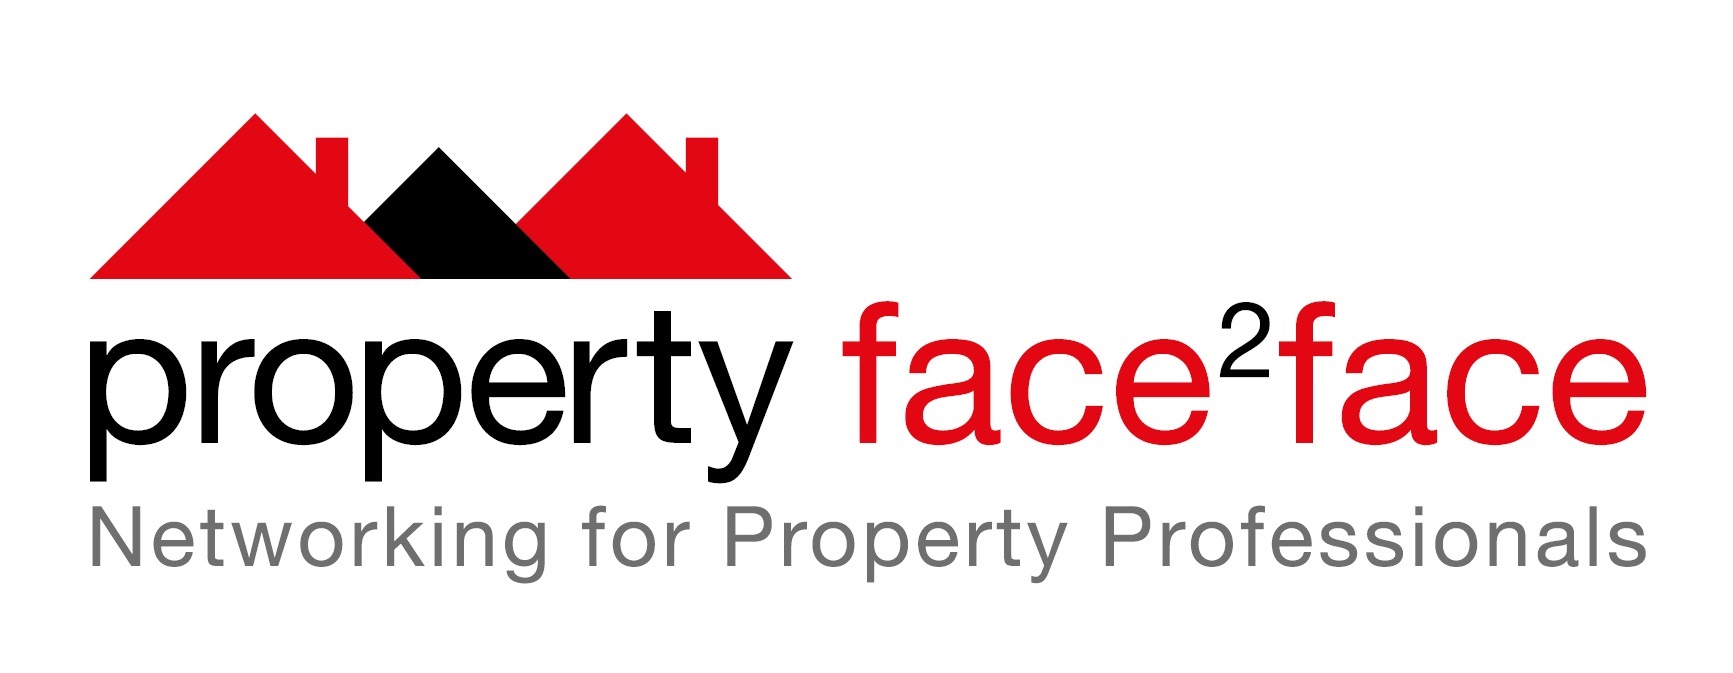 Property Face2face